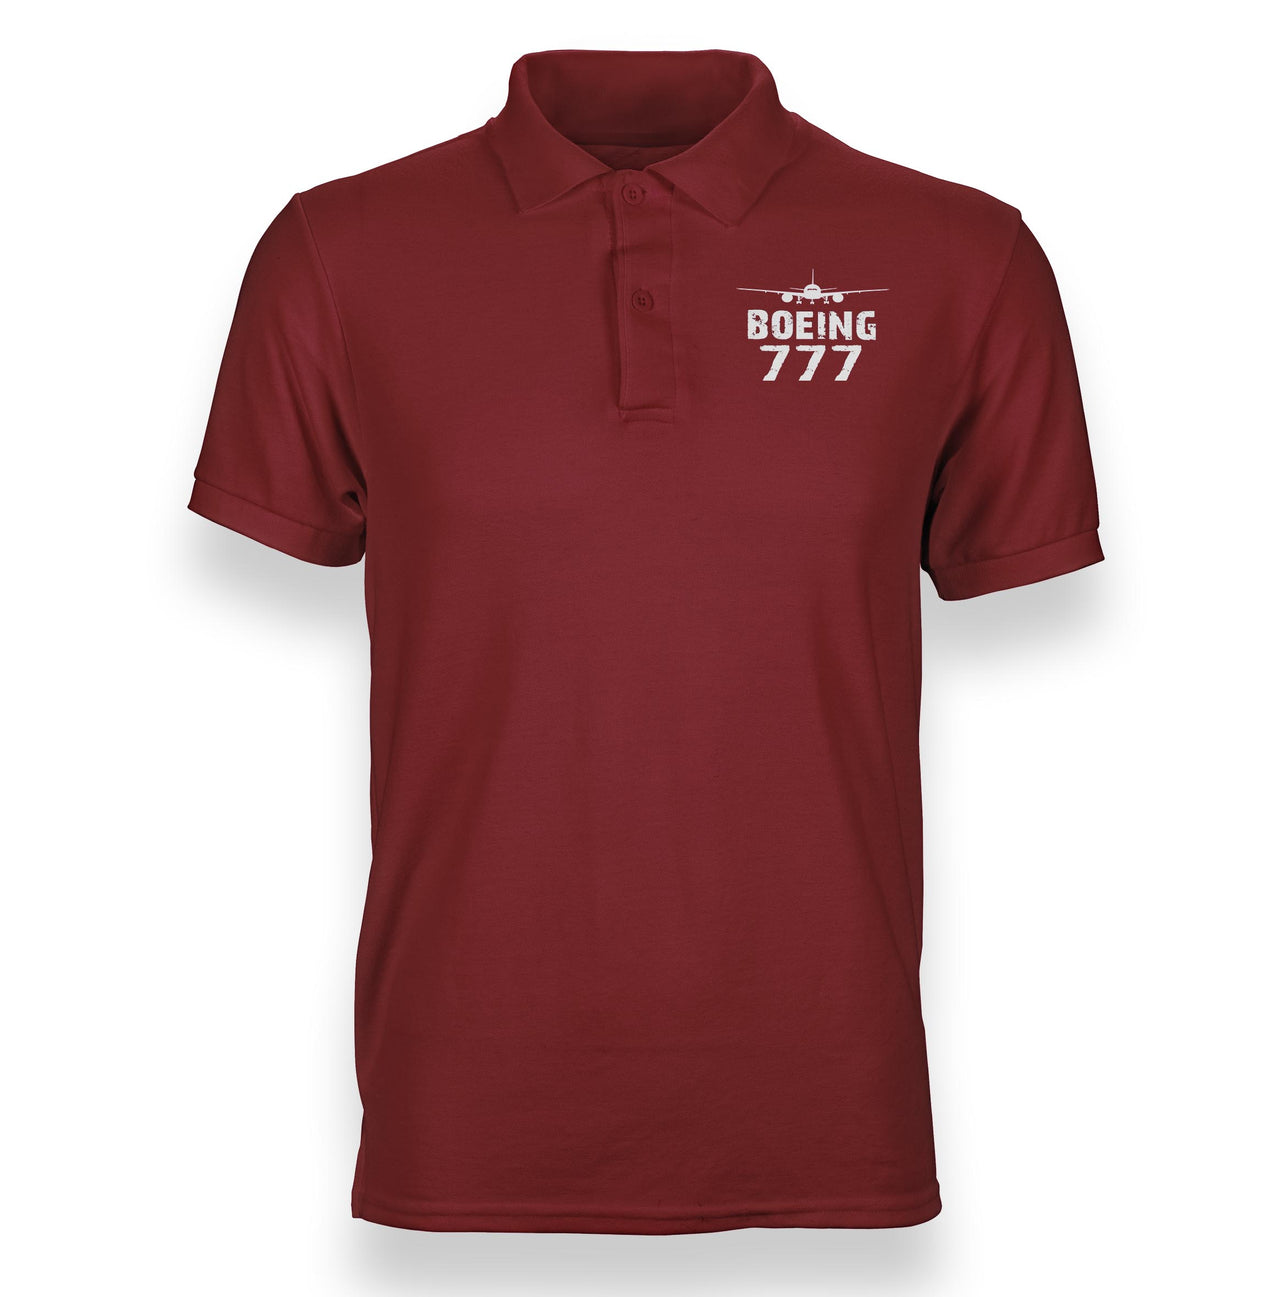 Boeing 777 & Plane Designed Polo T-Shirts